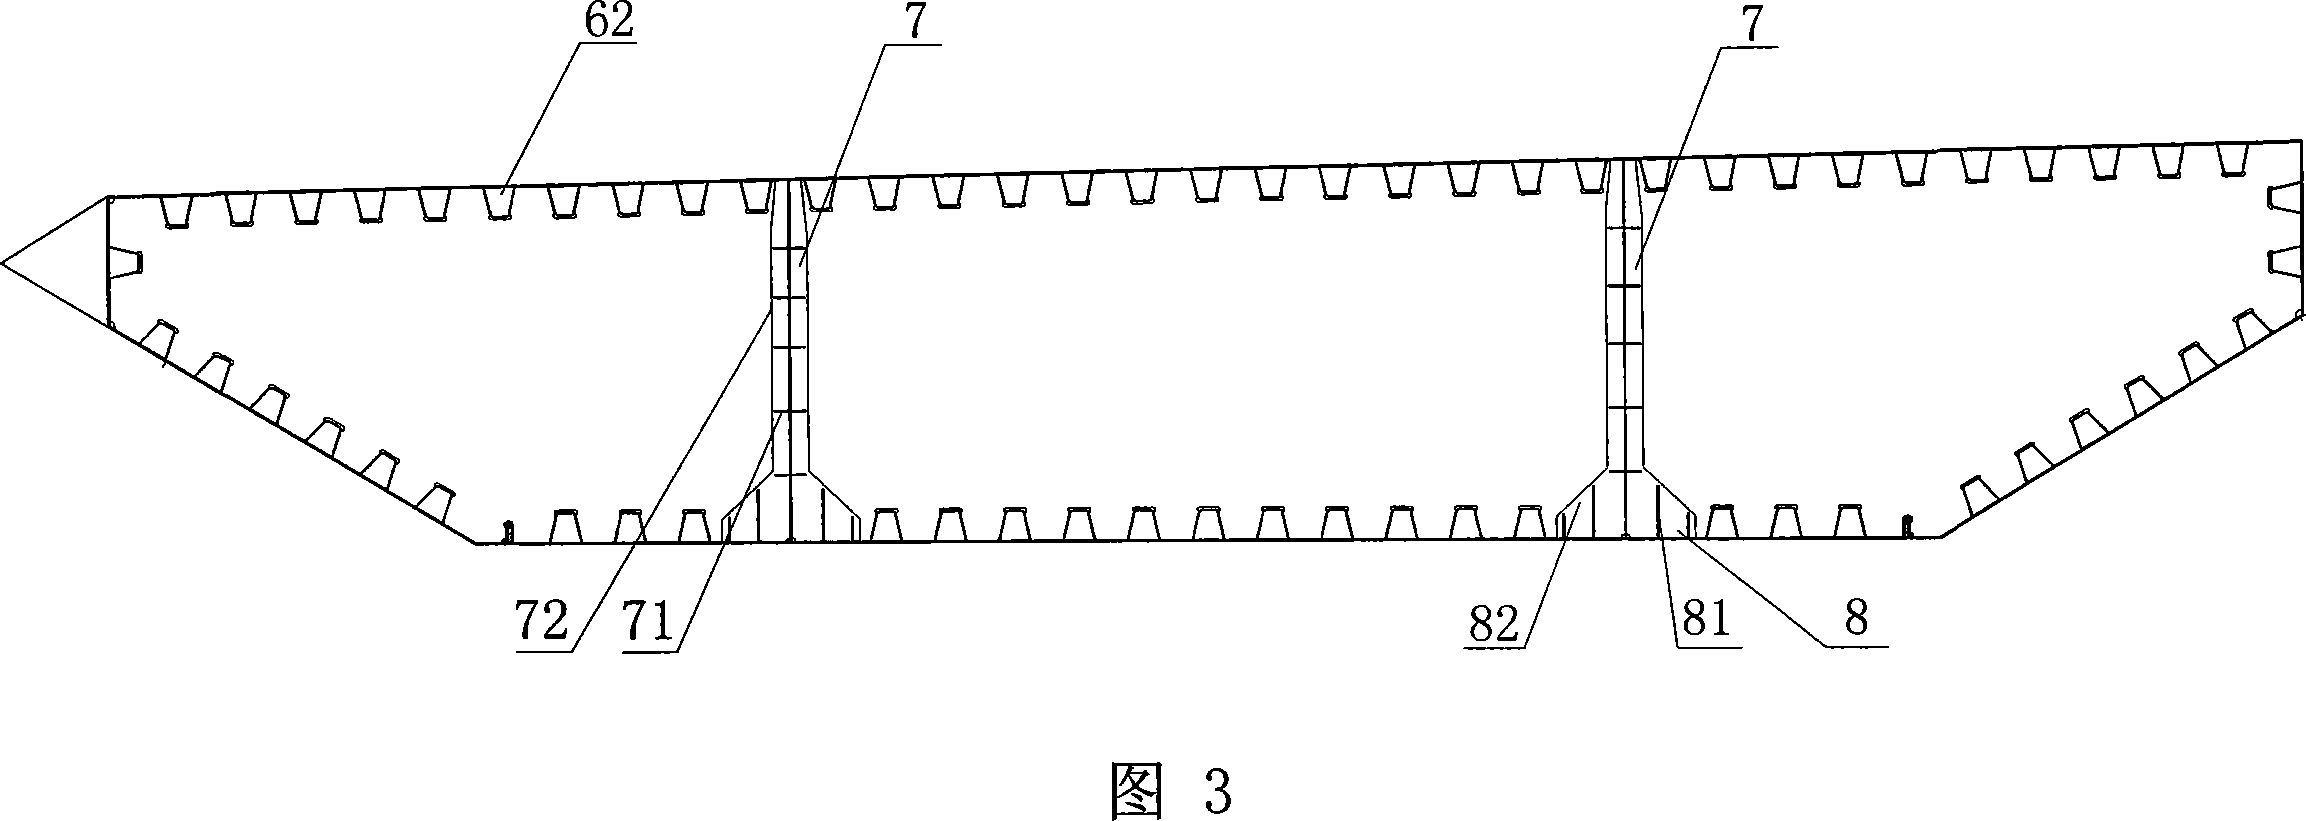 Single-tower self-anchored suspension bridge